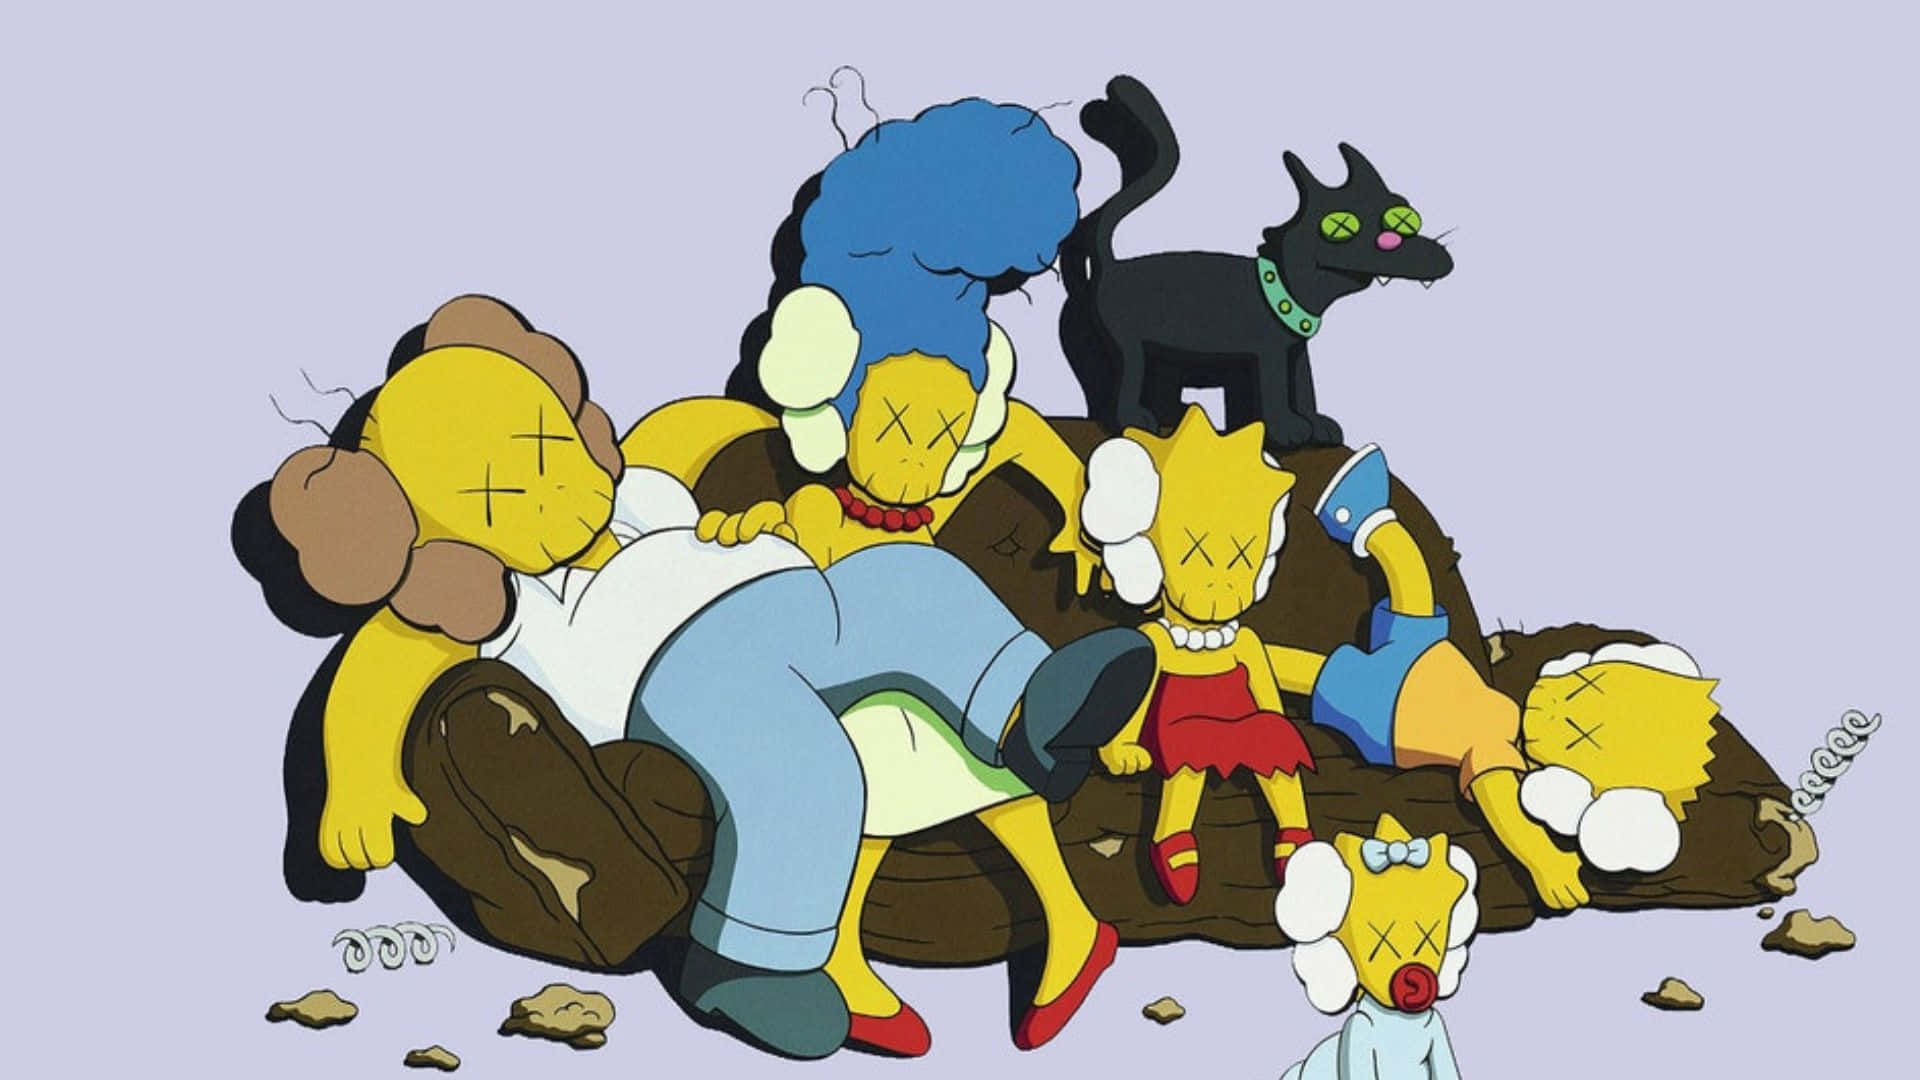 KAWS meets The Simpsons - A creative reinterpretation of the classic cartoon family. Wallpaper